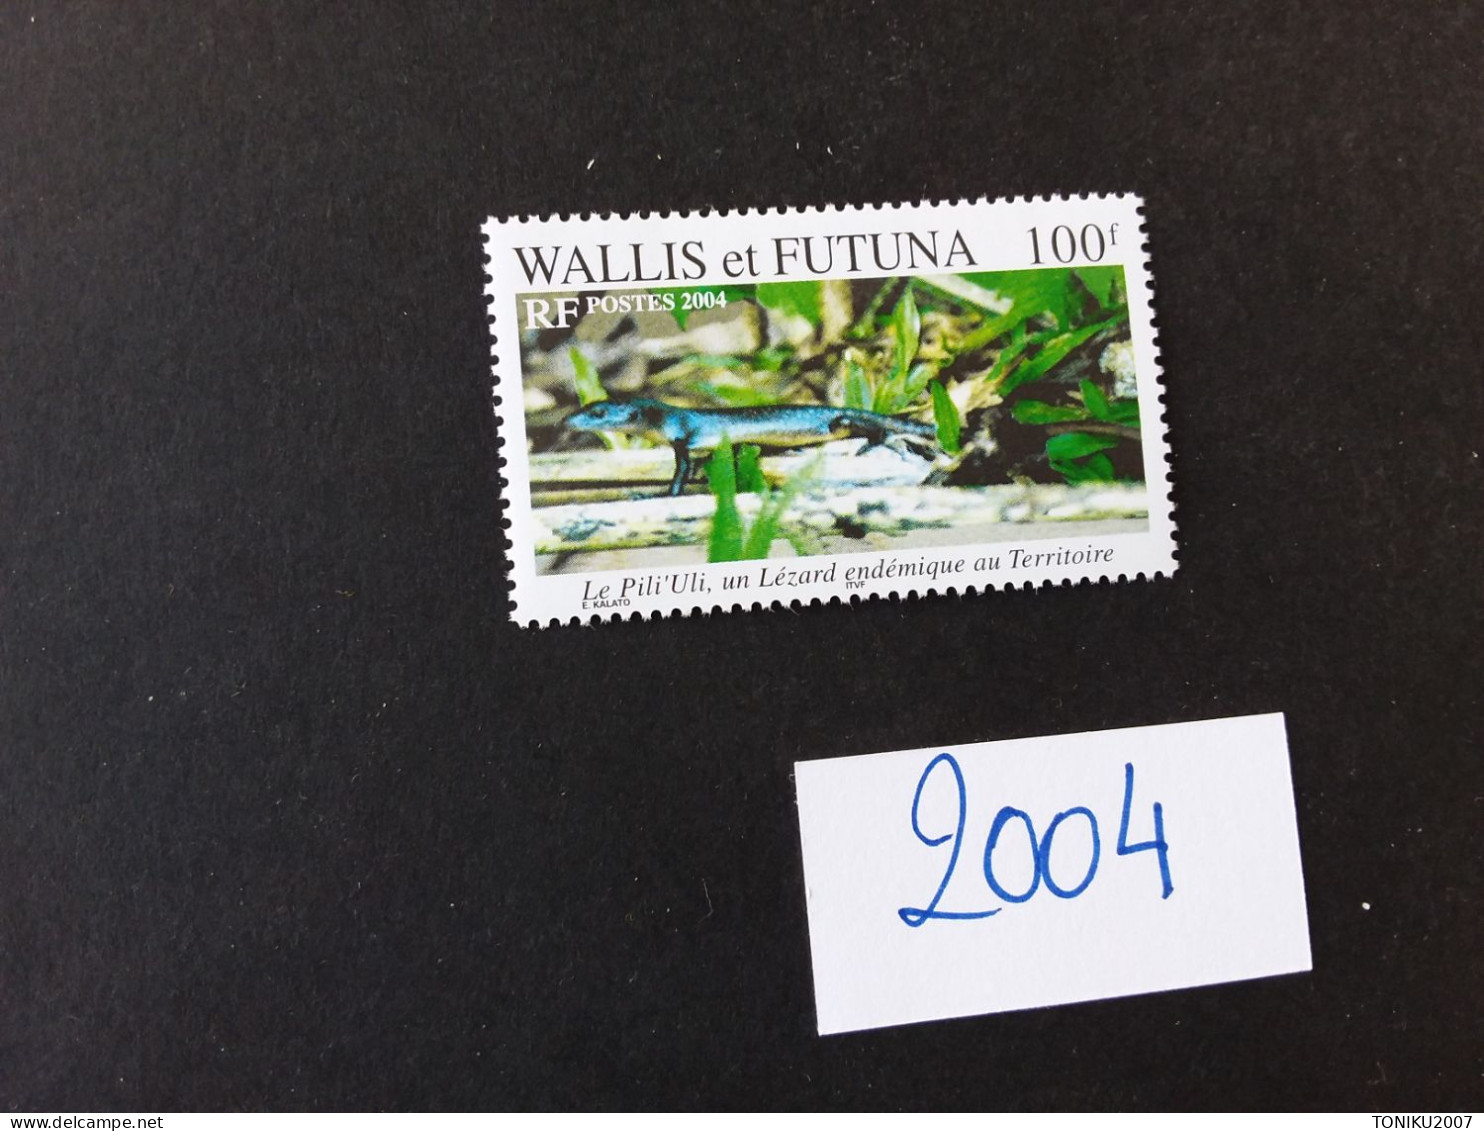 WALLIS ET FUTUNA 2004** - MNH - Unused Stamps